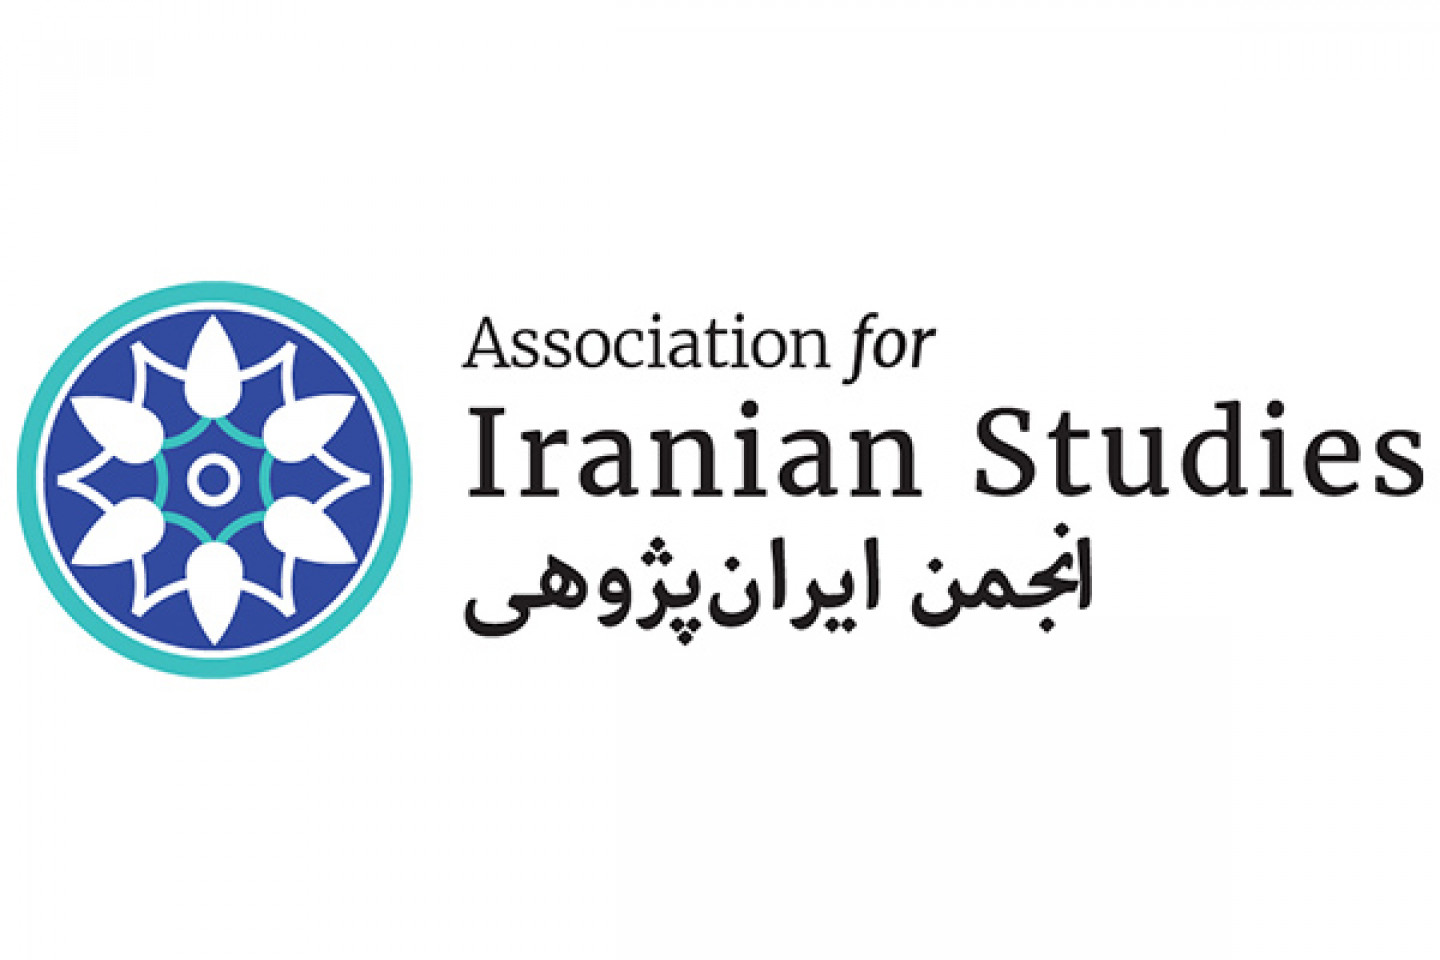 Association for Iranian Studies logo